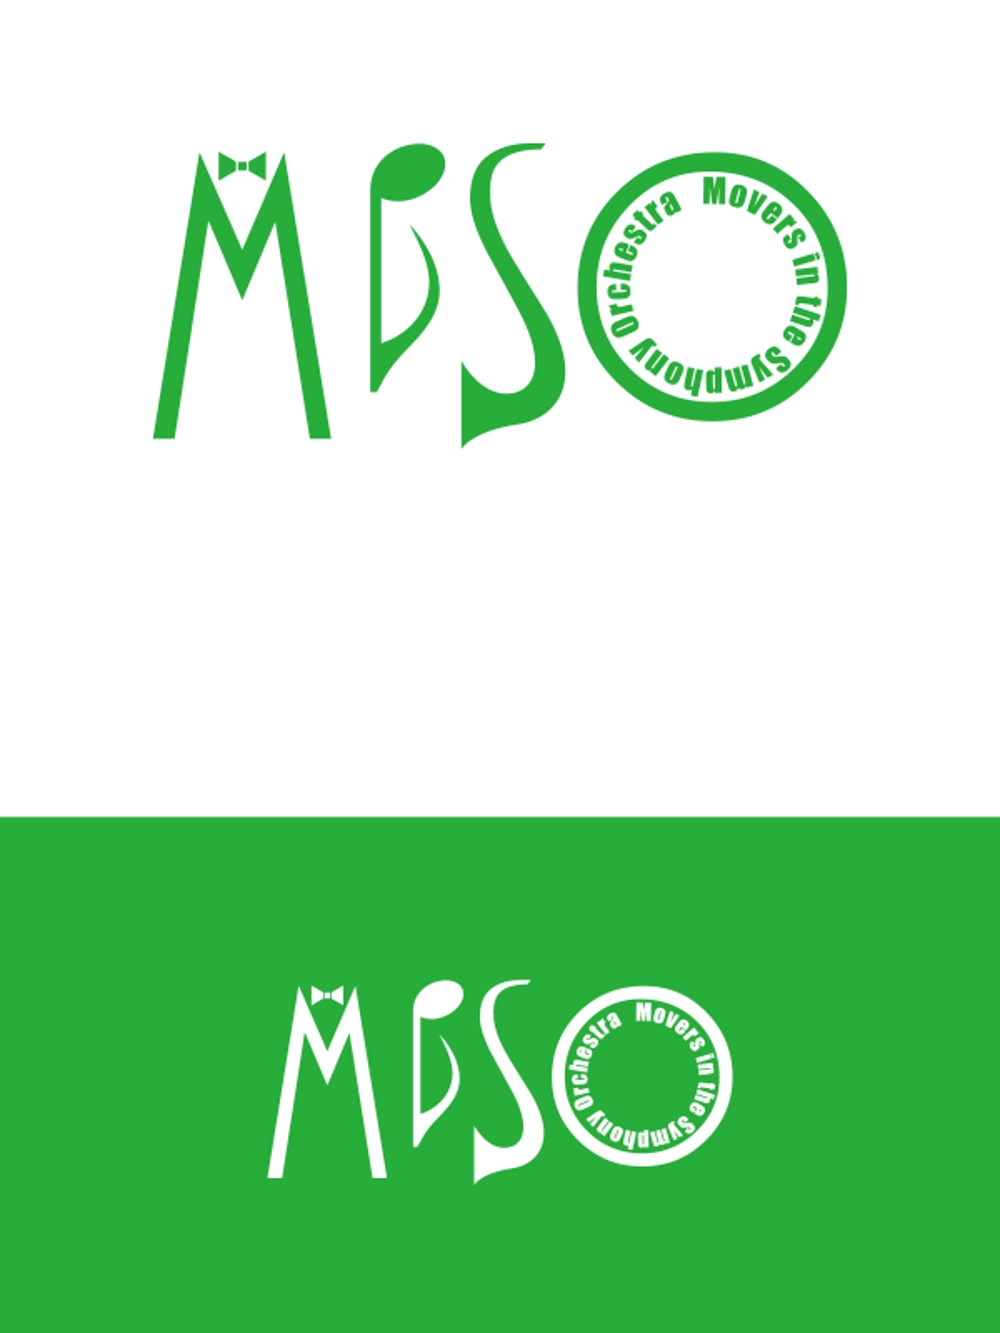 MiSO logo_serve.jpg